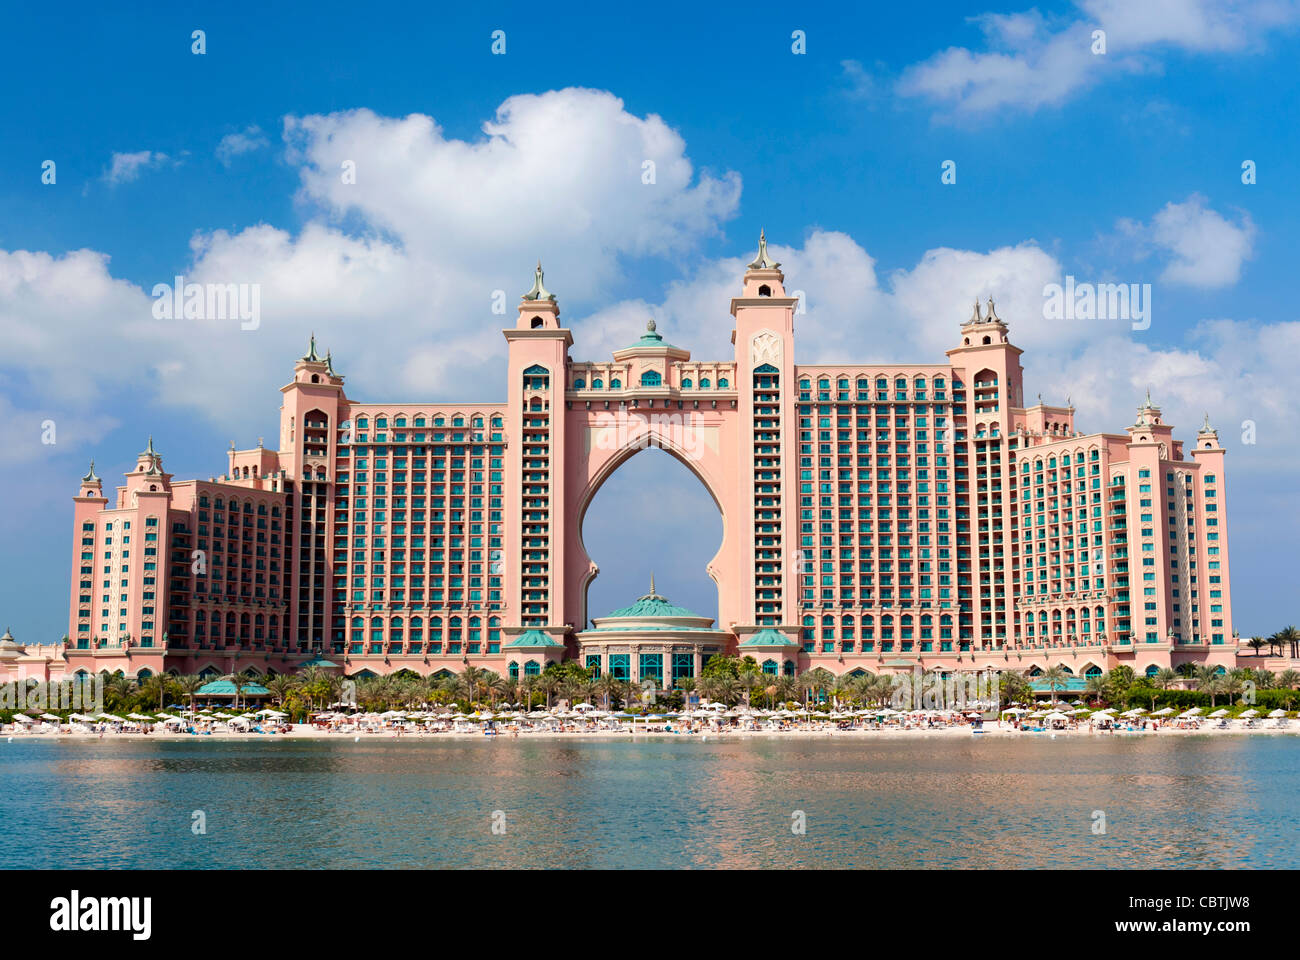 The Atlantis Hotel located on Palm Jumeirah in Dubai in United Arab Emirates Stock Photo